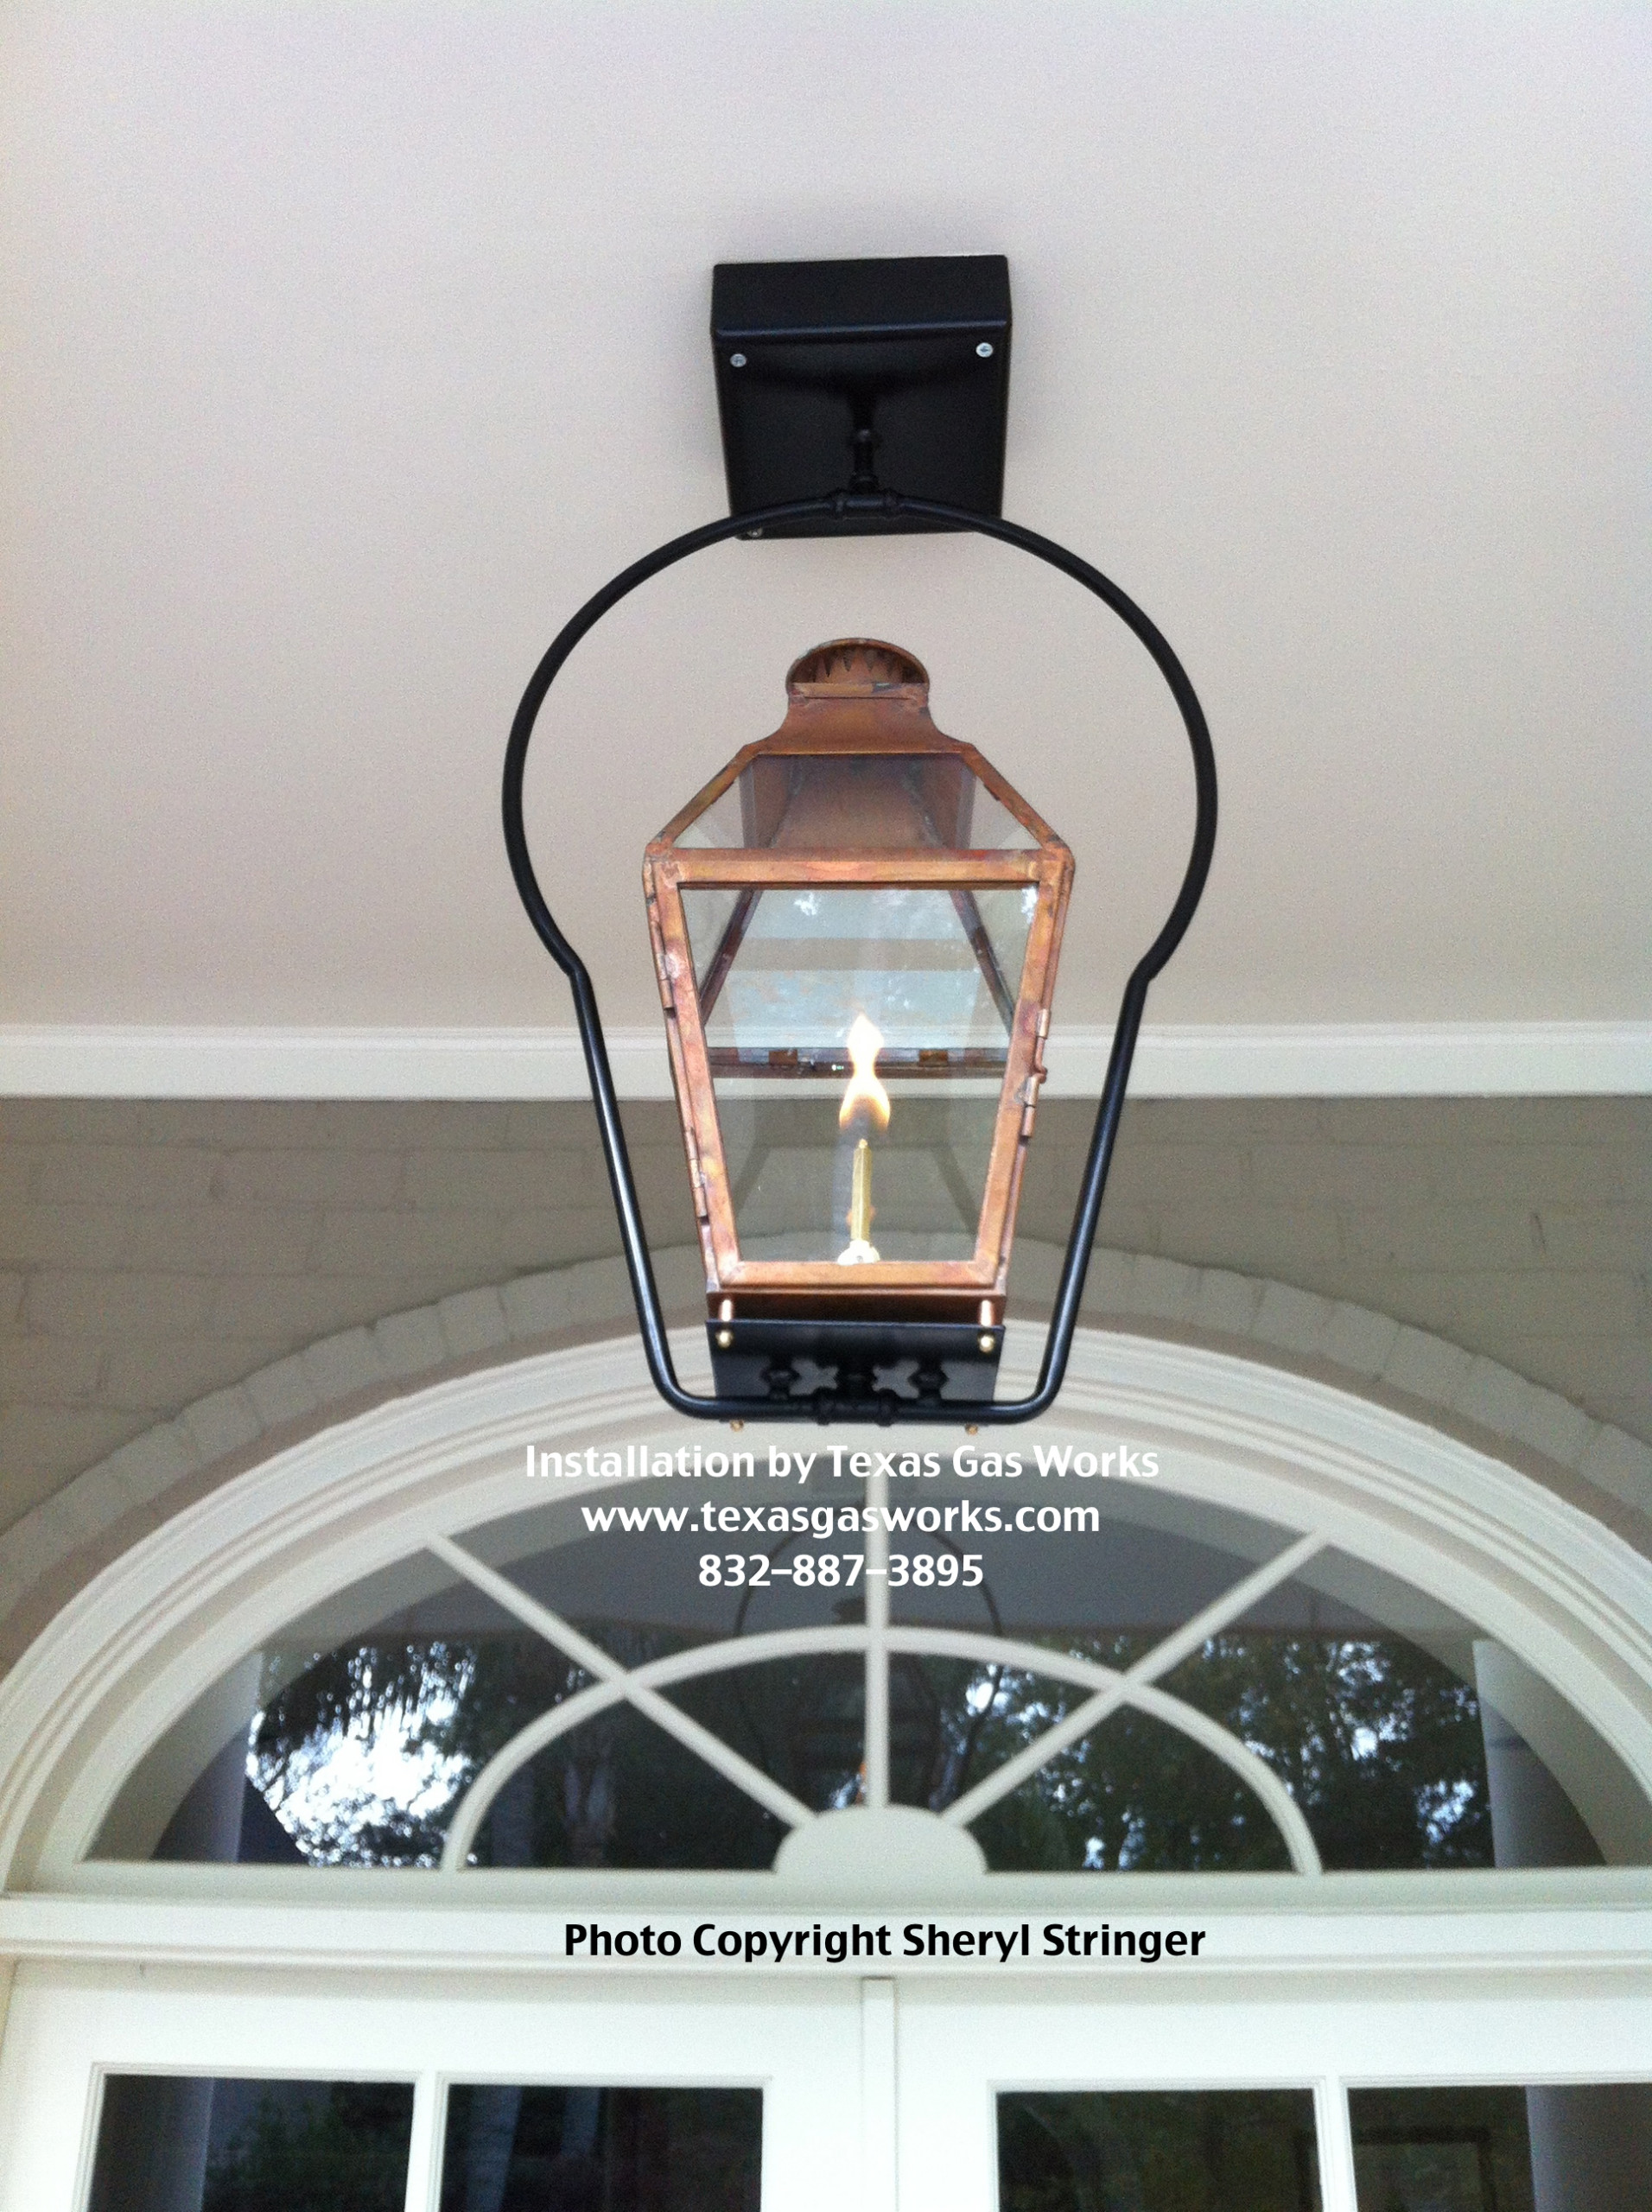 Gas Lantern Installations by Texas Gas Works